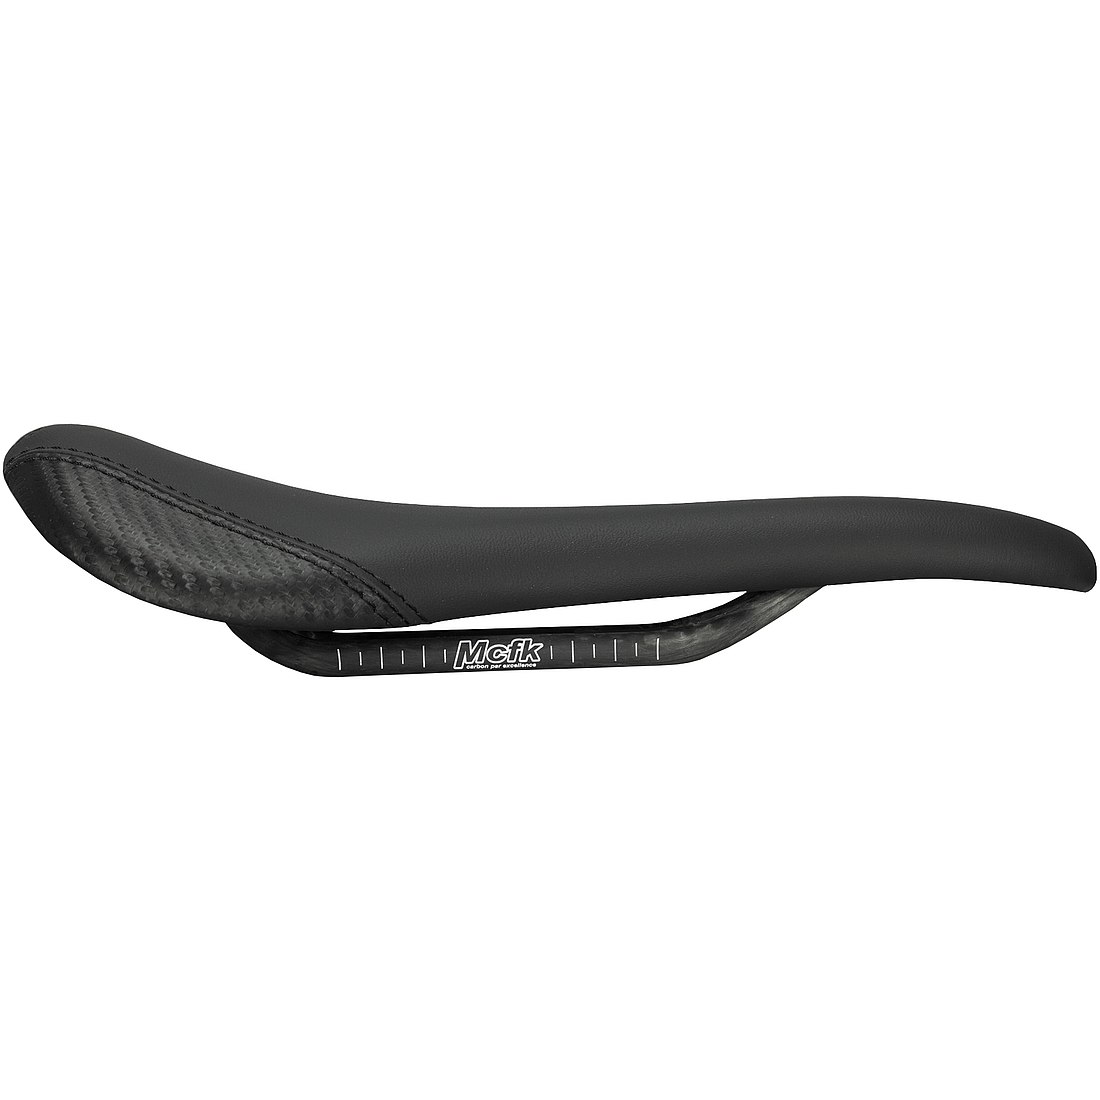 Productfoto van Mcfk Carbon Leathersaddle - leather black